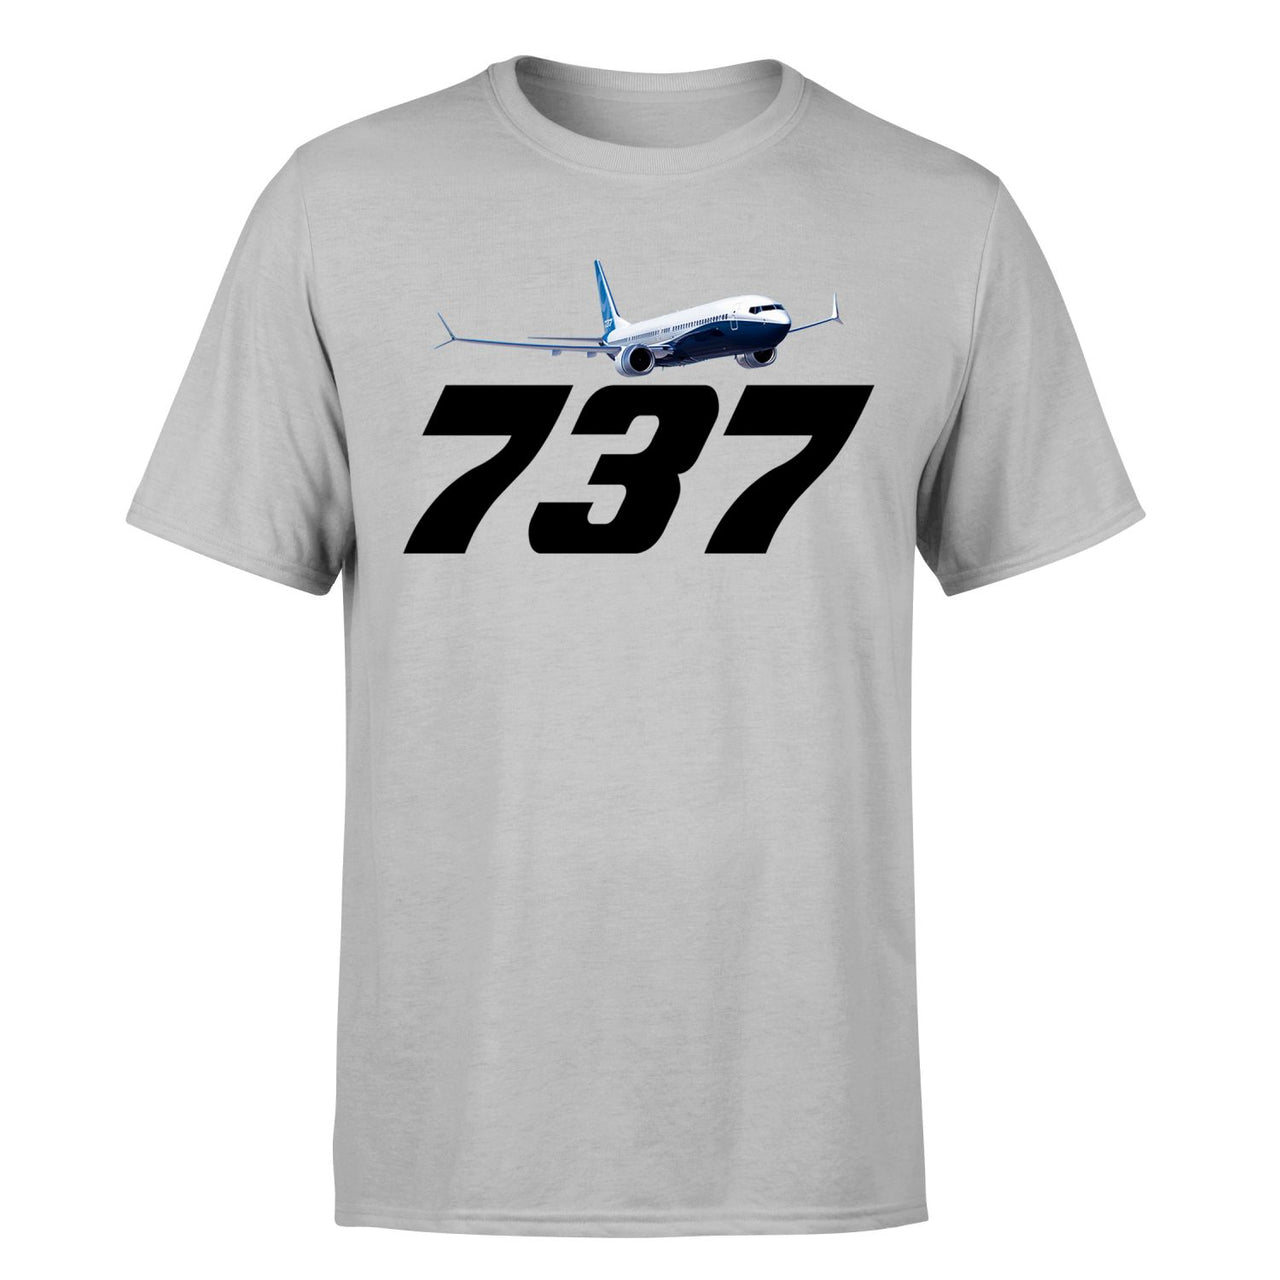 Super Boeing 737-800 Designed T-Shirts